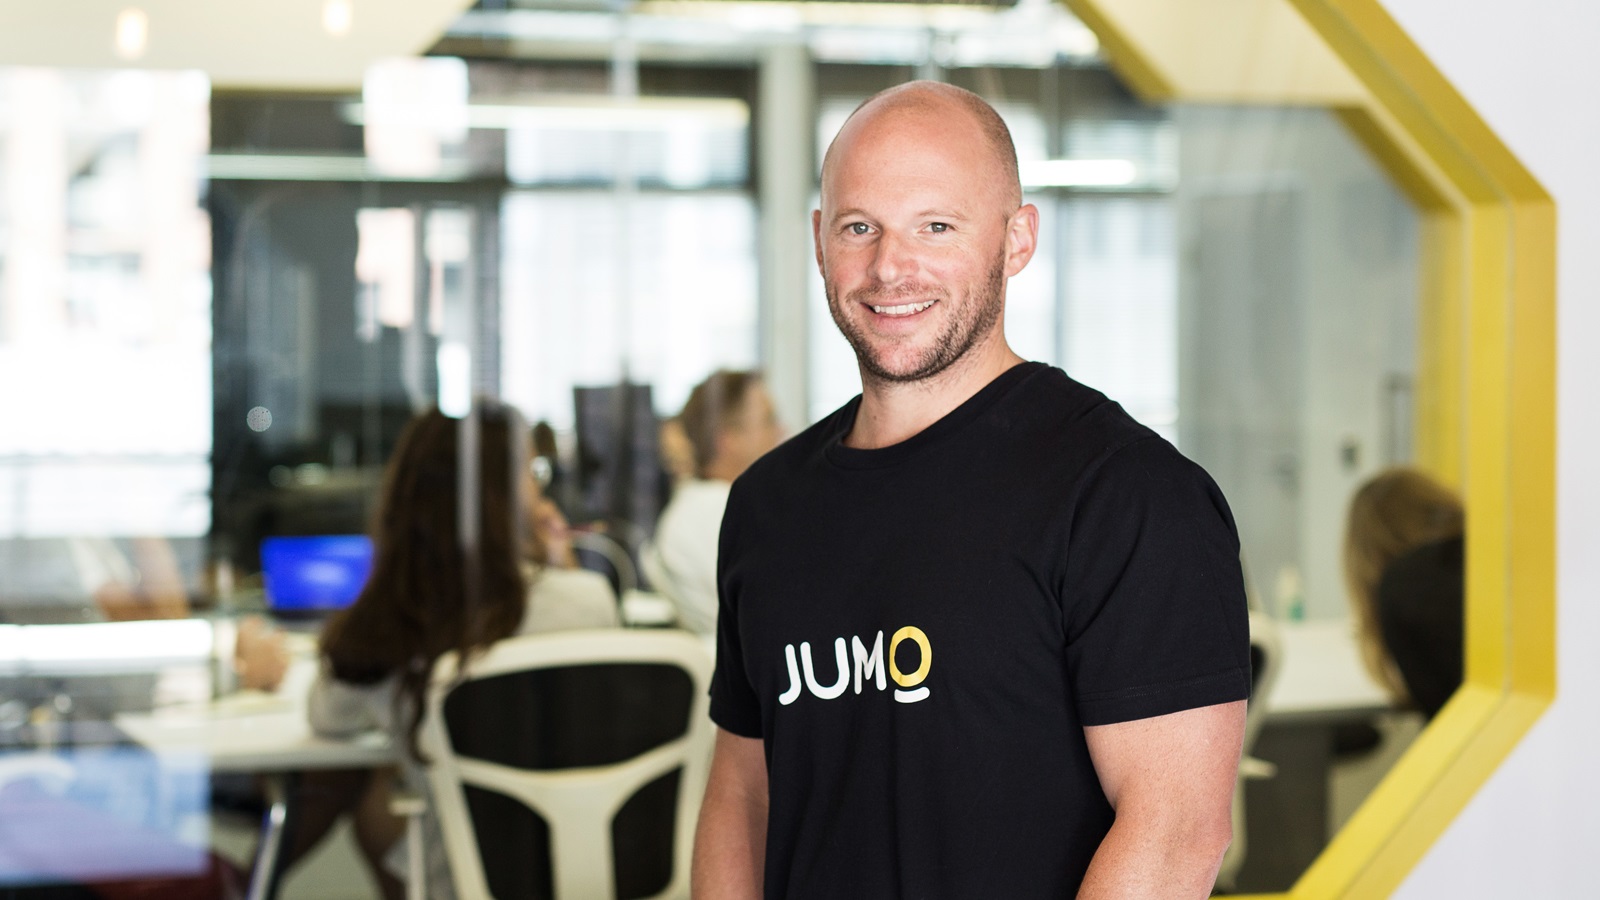 TechCabal Daily - South Africa's JUMO raises $55 million funding